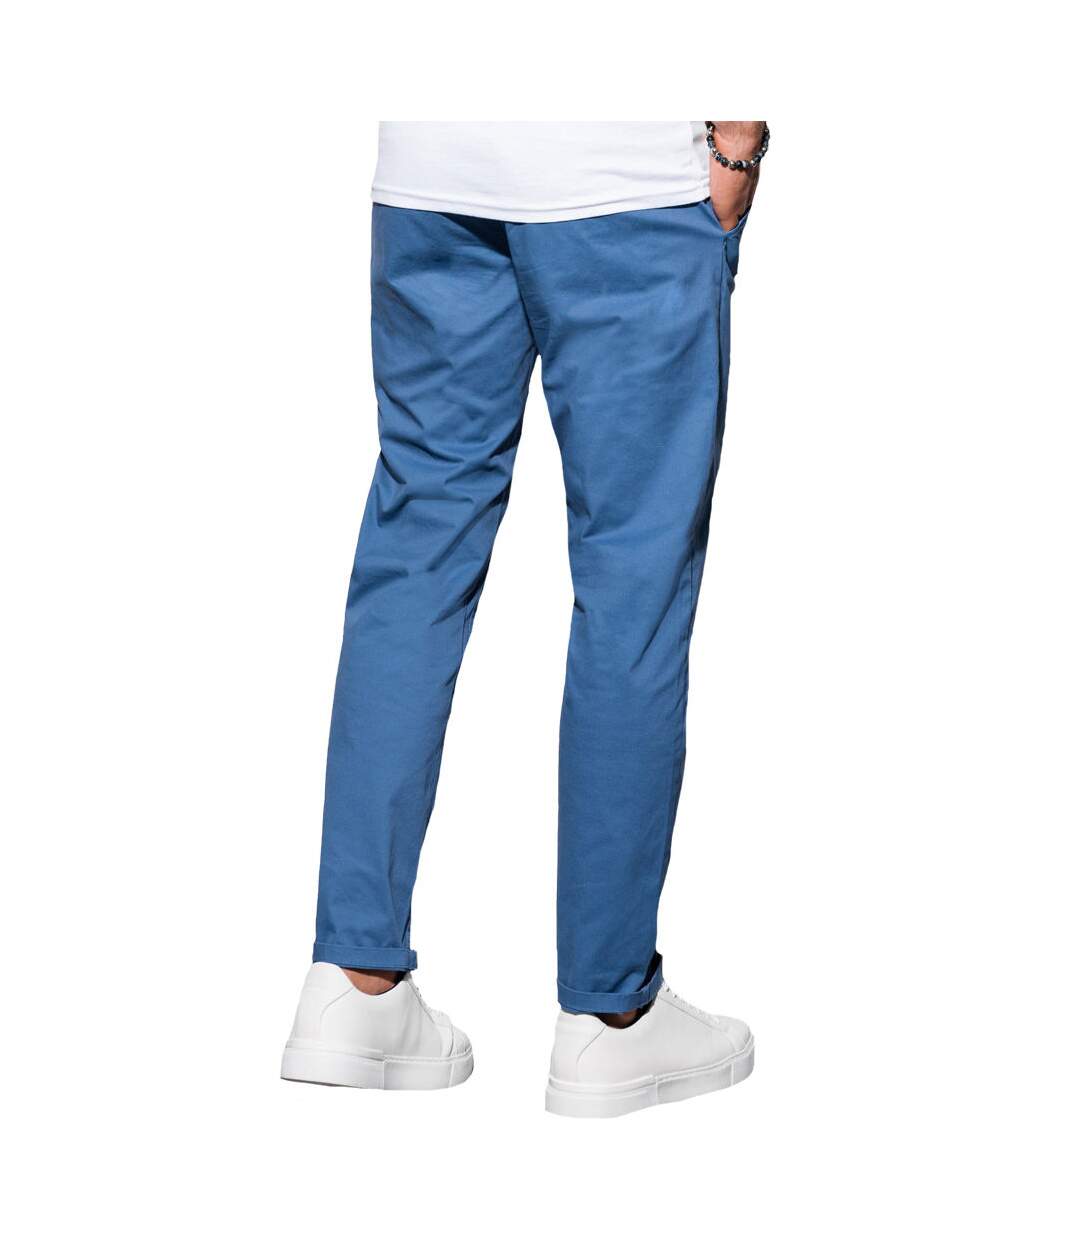 Pantalon chino homme Pantalon 894 bleu roi